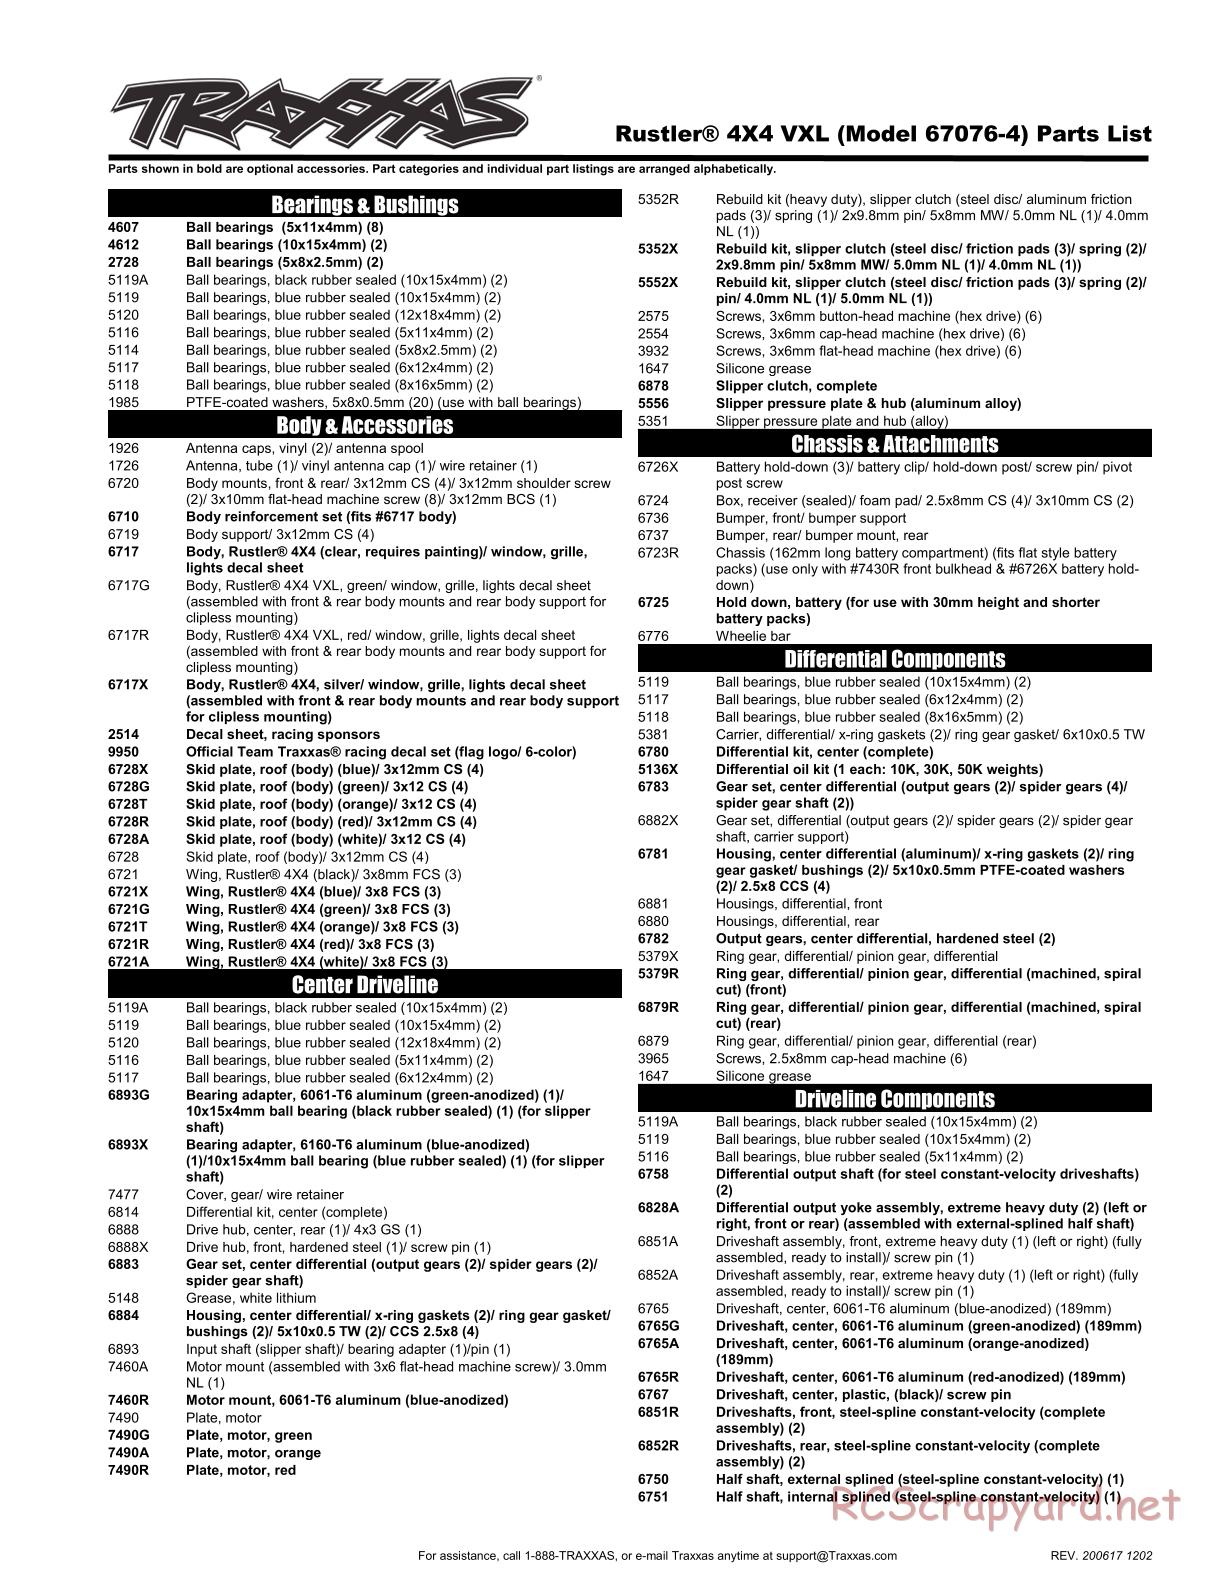 Traxxas - Rustler 4x4 VXL - Parts List - Page 1